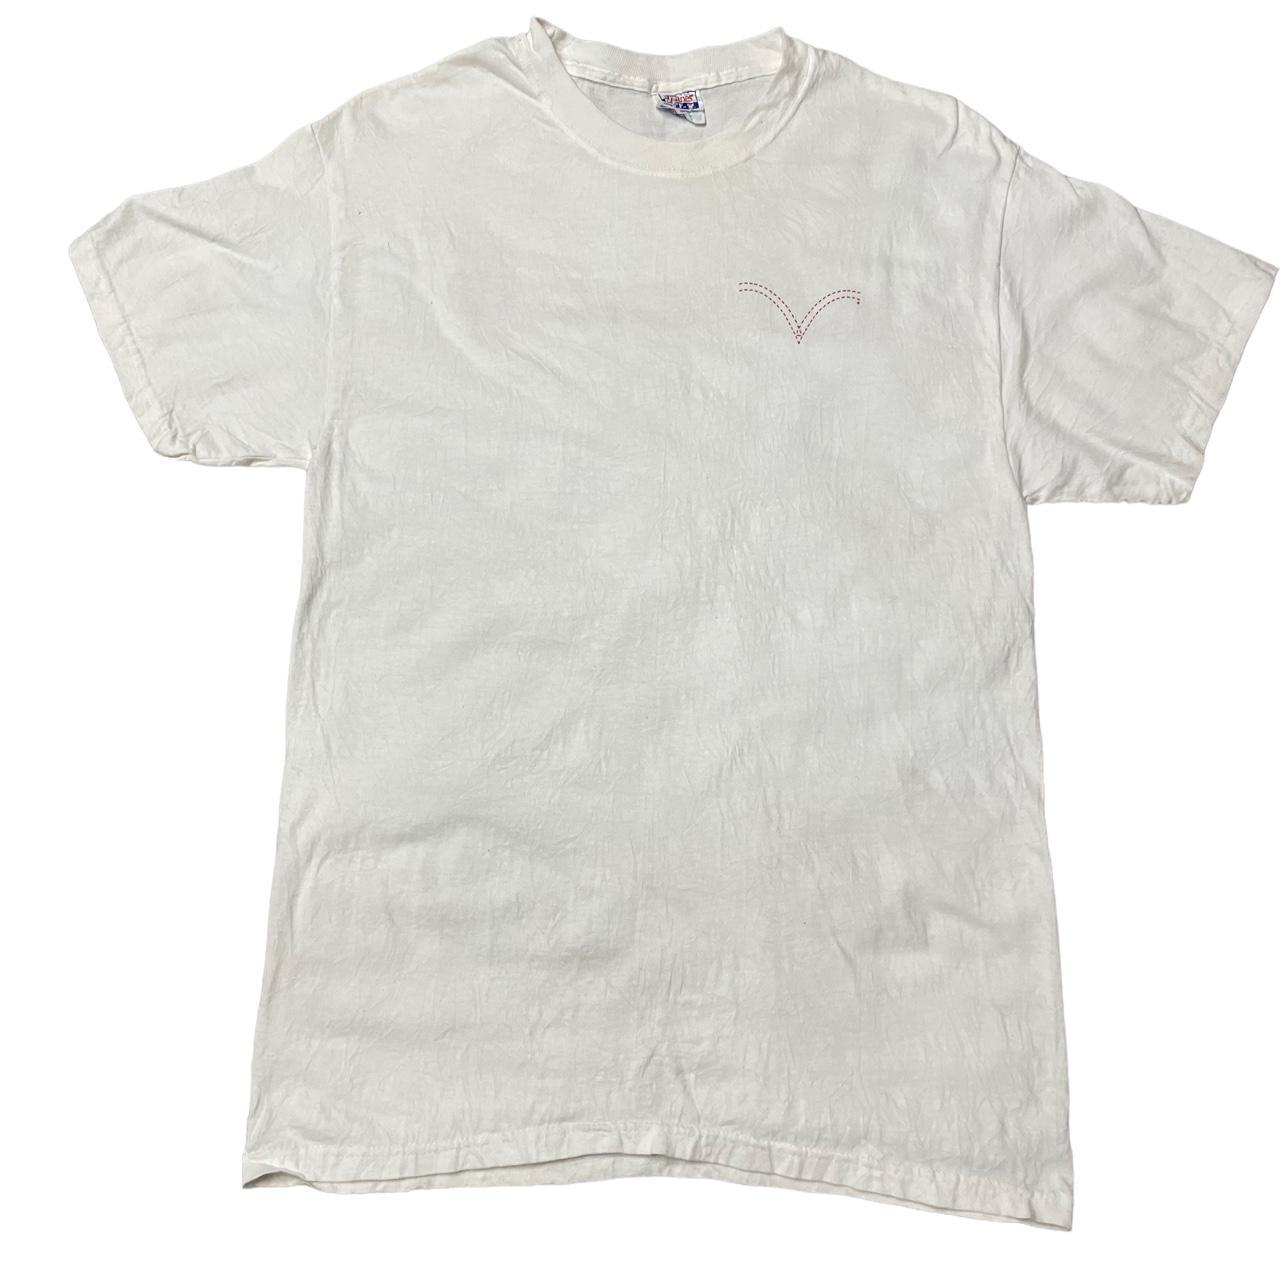 Levi's Men's Burgundy and White T-shirt